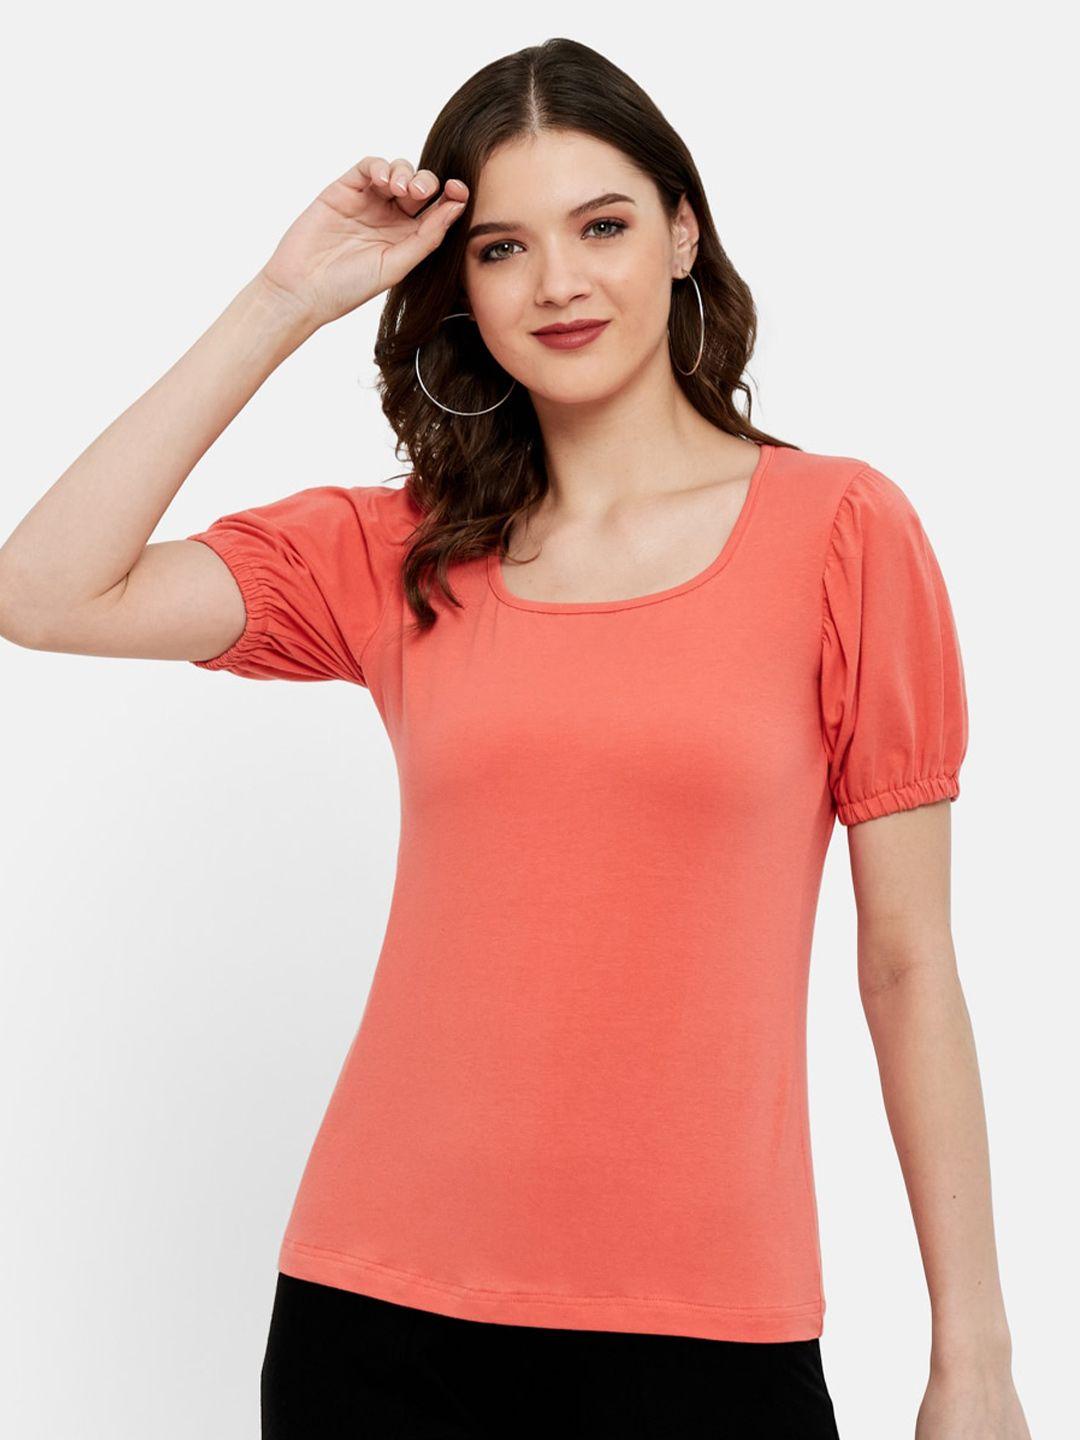 unmade-women-orange-solid-cotton-top